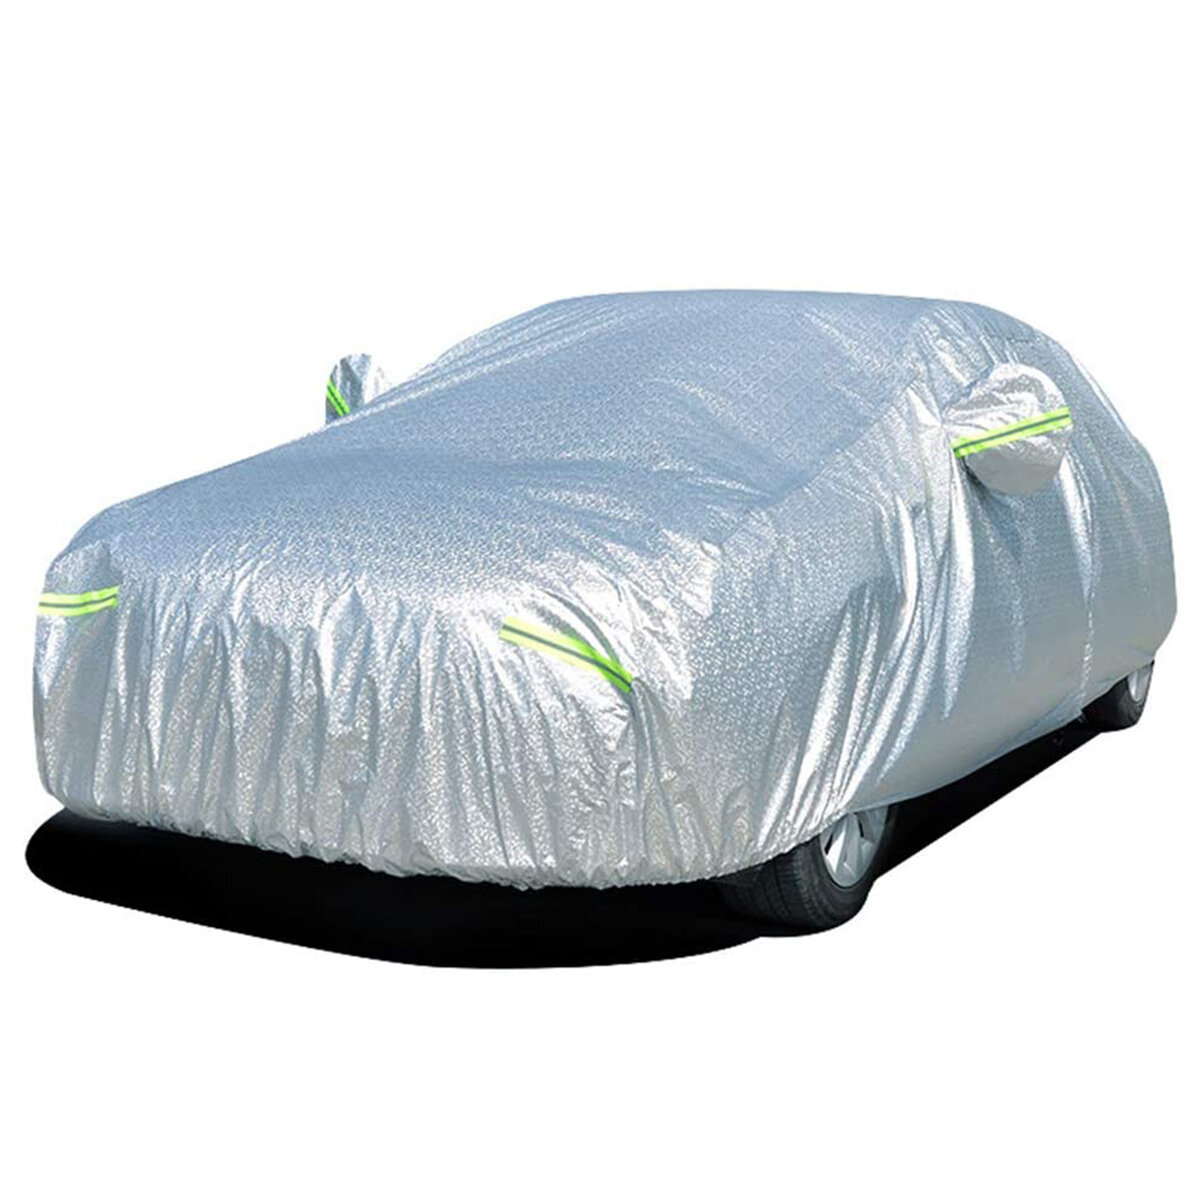 Full car cover reflective strip waterproof anti snow sun shade anti uv dustproof